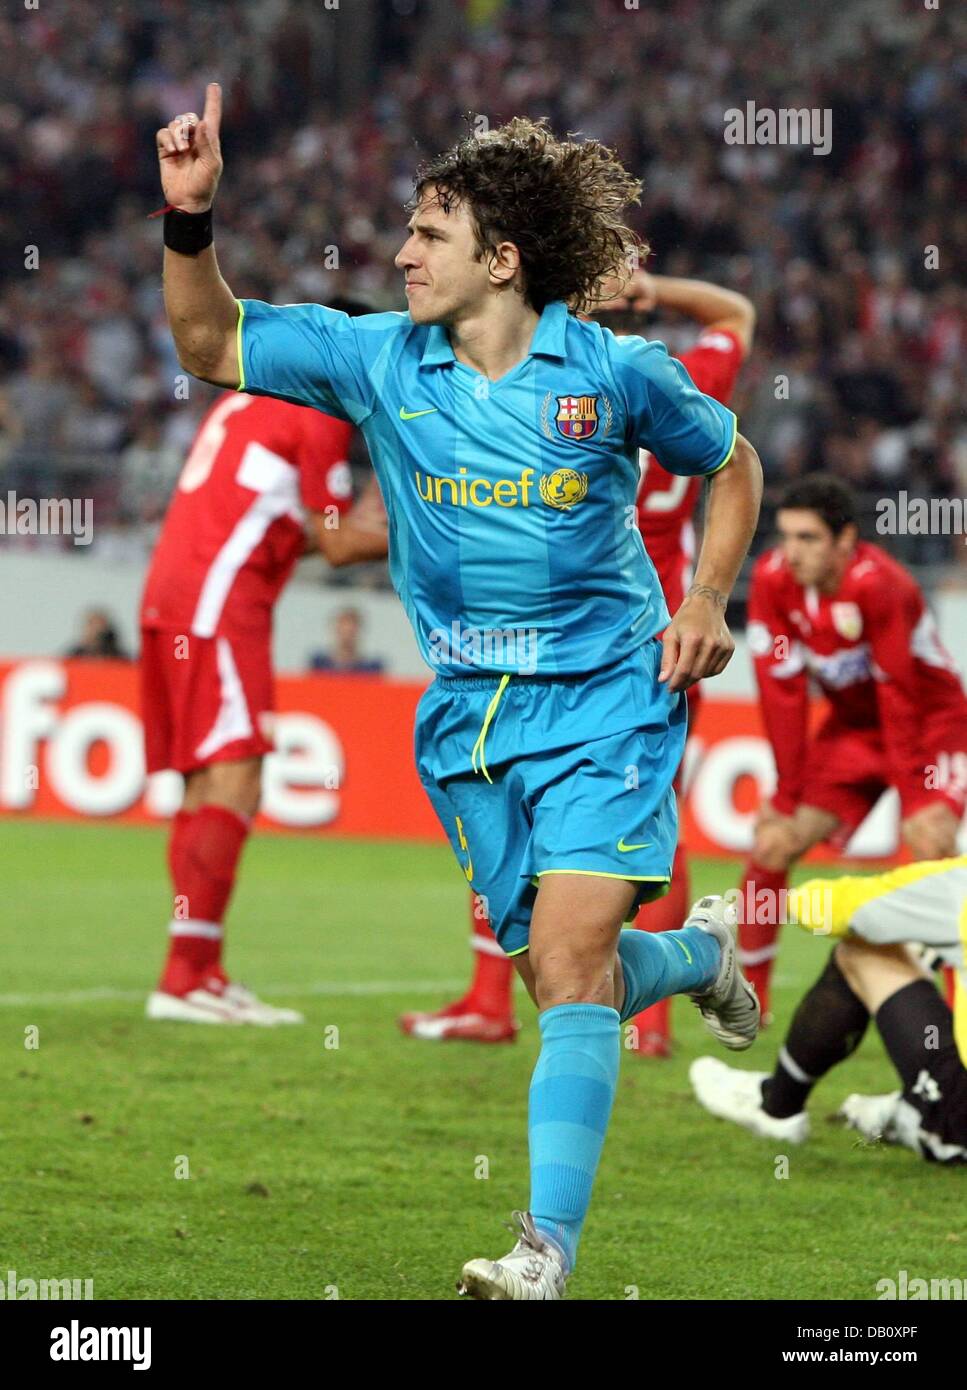 Barcelona's Carles Puyol cheers after scoring 1-0 during the Stuttgart vs. Barcelona Champions League match in Stuttgart, Germany, 02 October 2007. Photo: Bernd Weissbrod Stock Photo